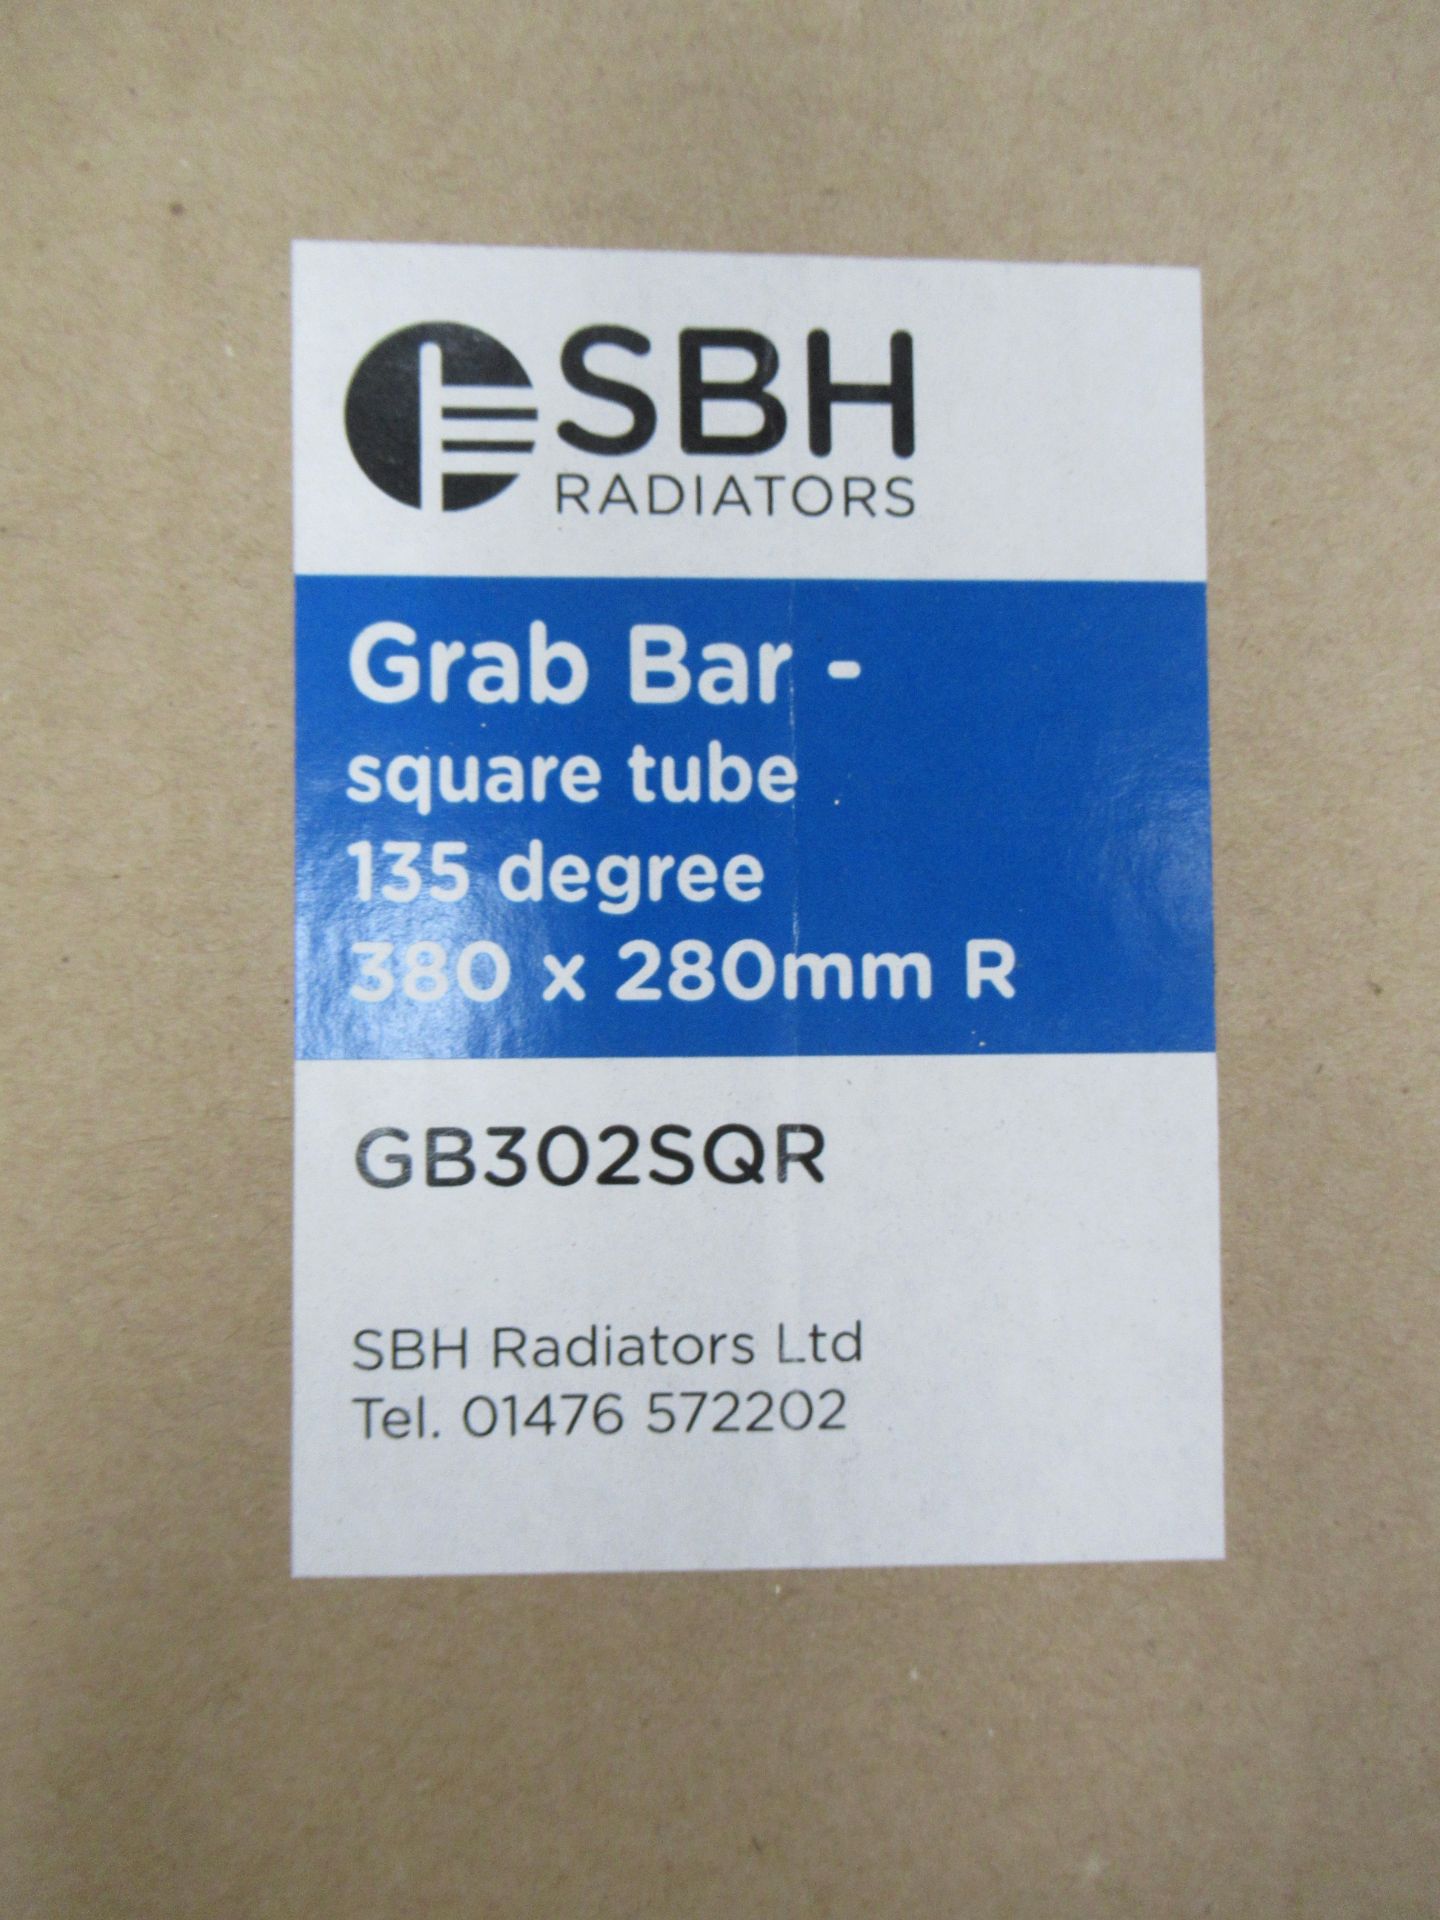 SBH Radiators Grab Bar - Square Tube - 135 Degree - 380 x 280mm - Righthand - Image 2 of 3